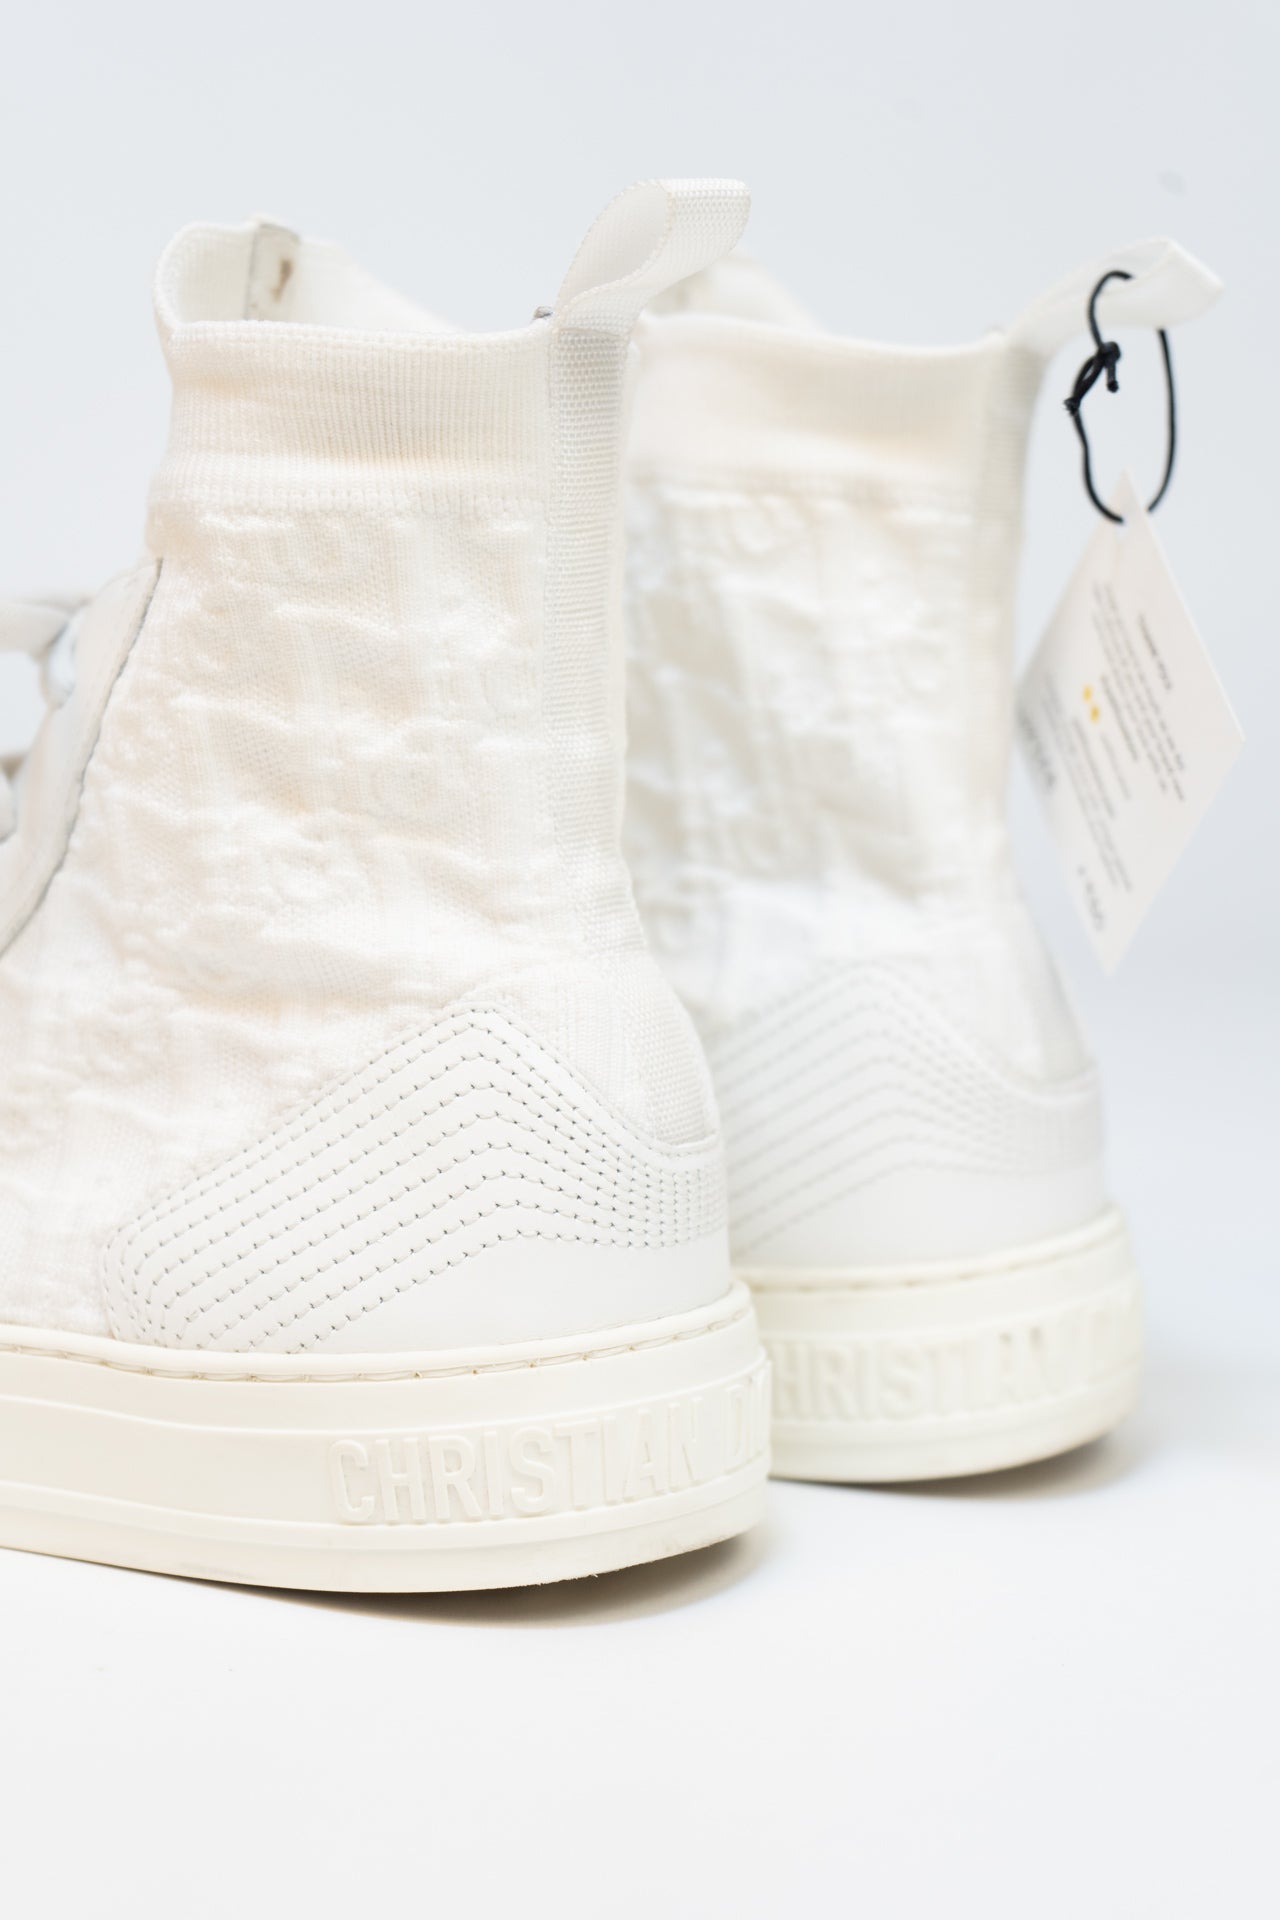 Dior B23 High-Top Sneaker White-Size 40